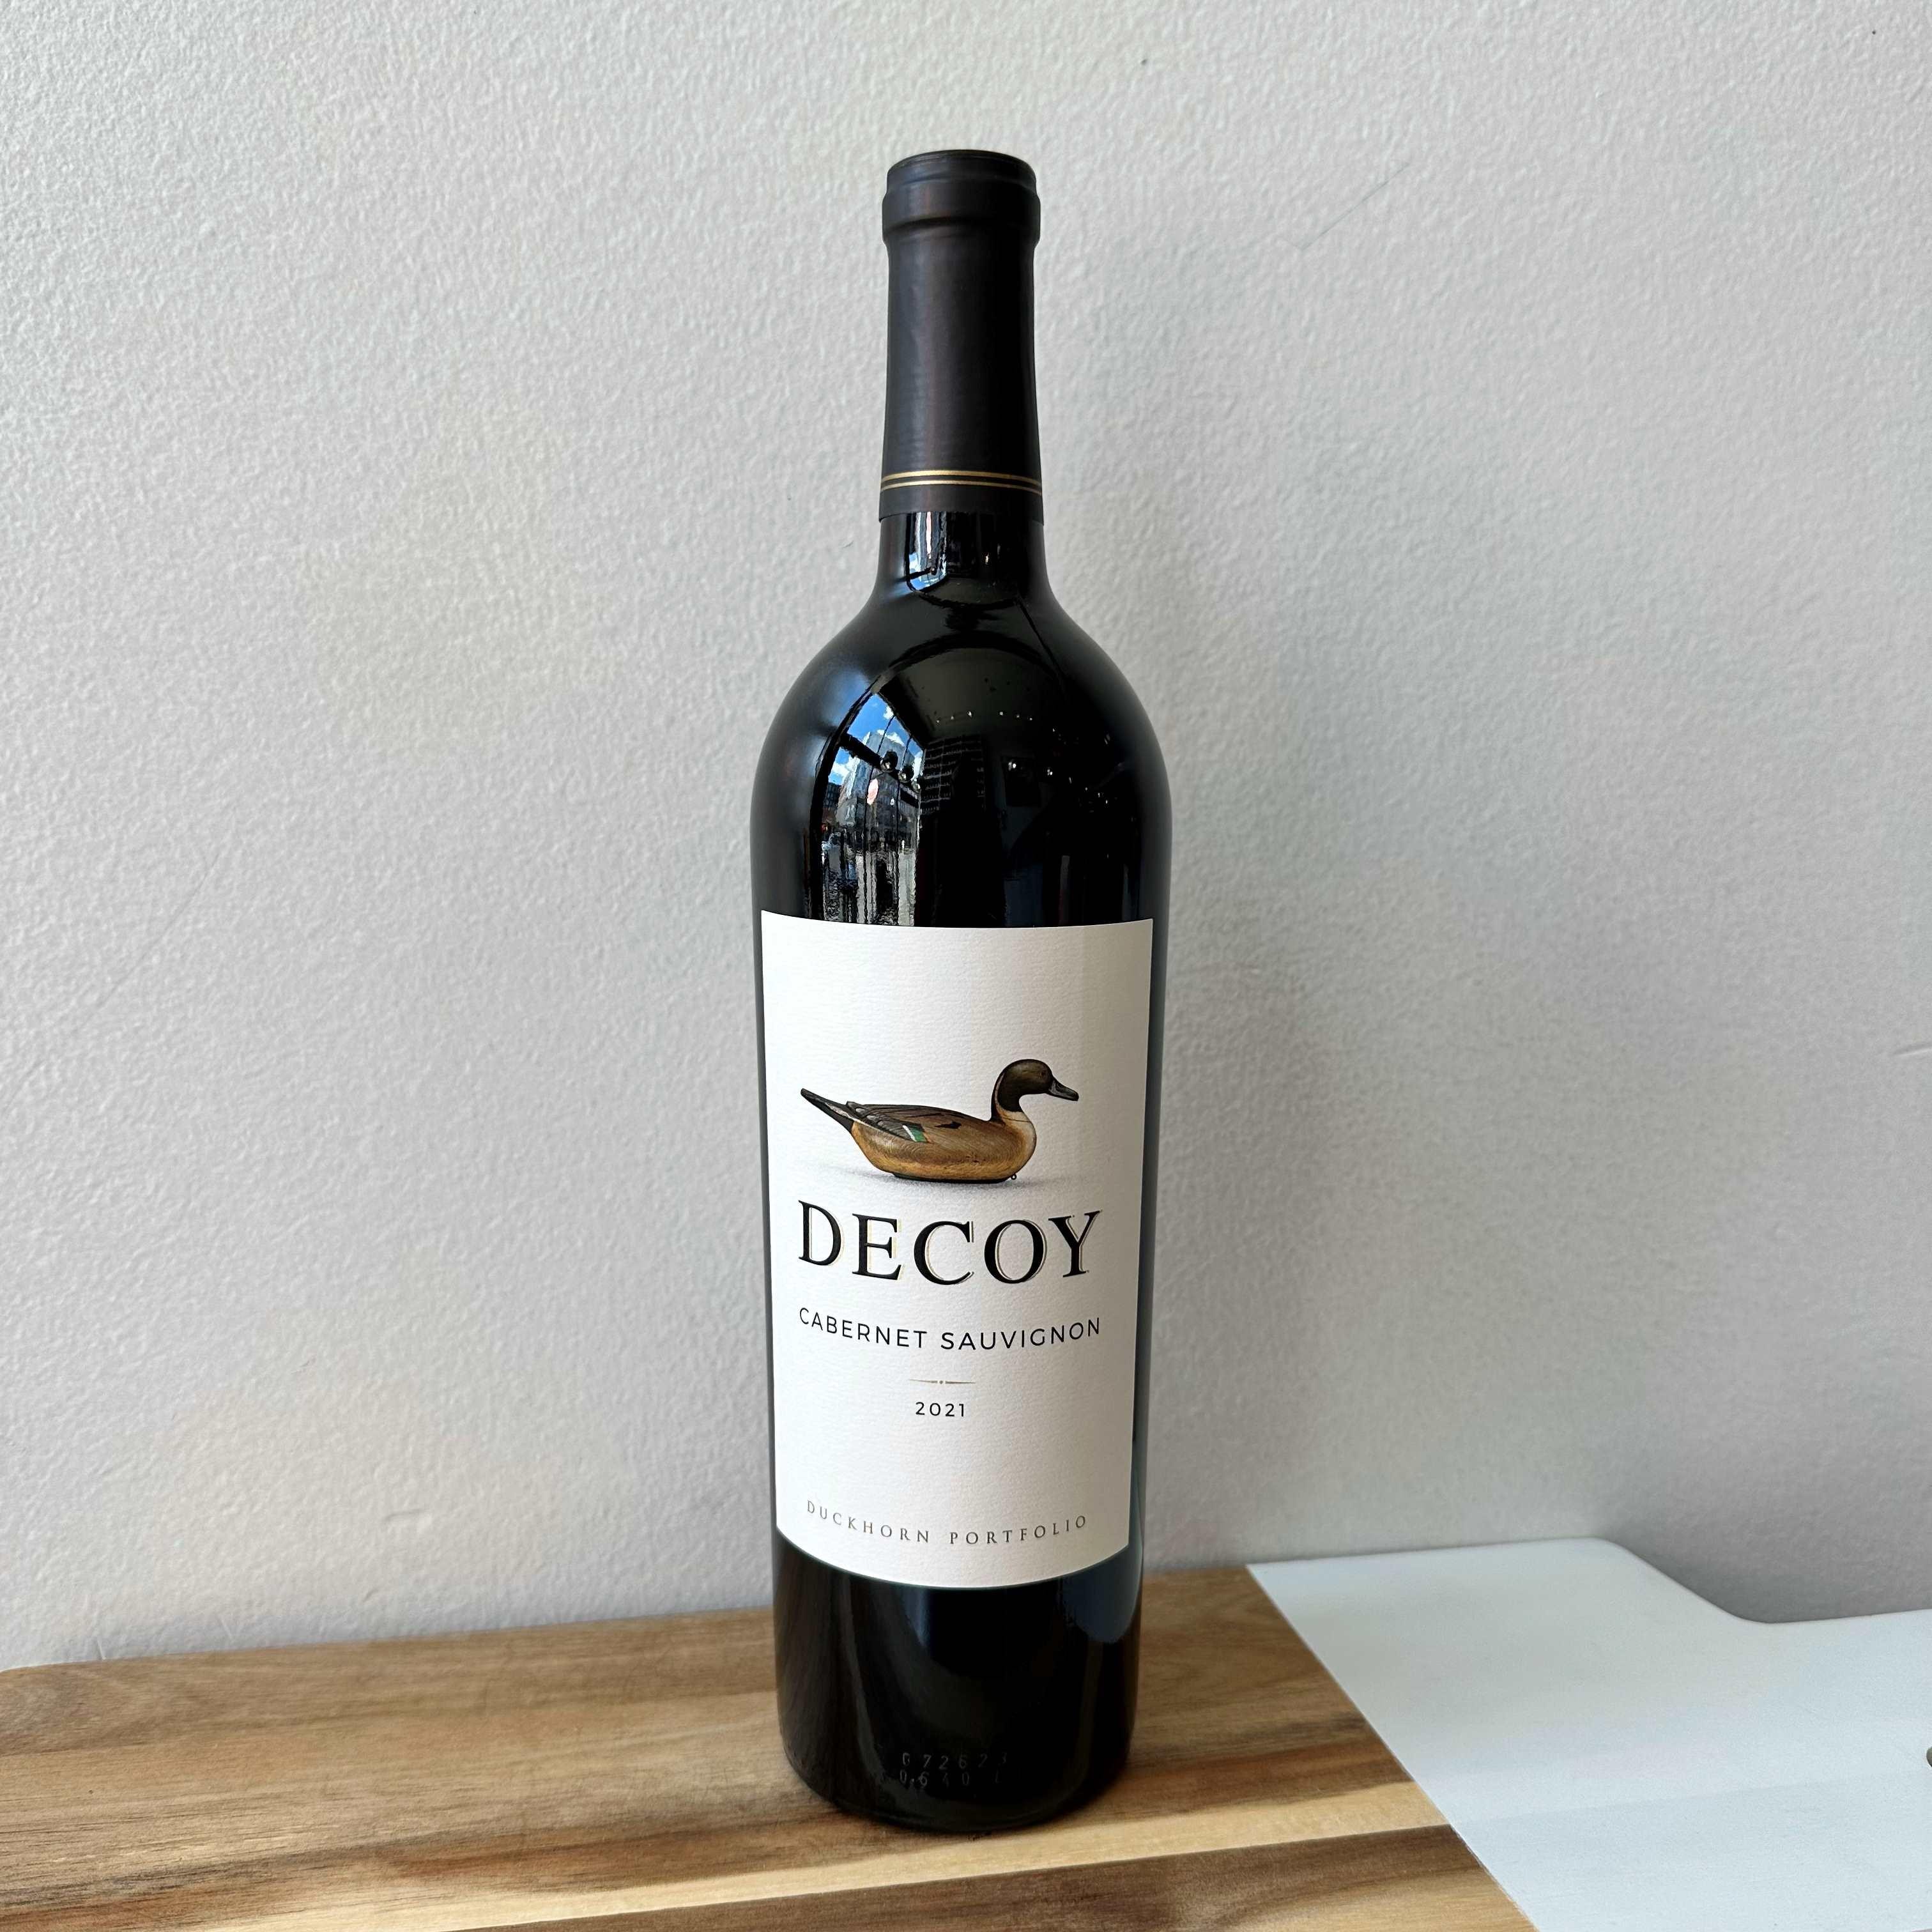 Duckhorn Vineyards "Decoy" Cabernet Sauvignon 2021